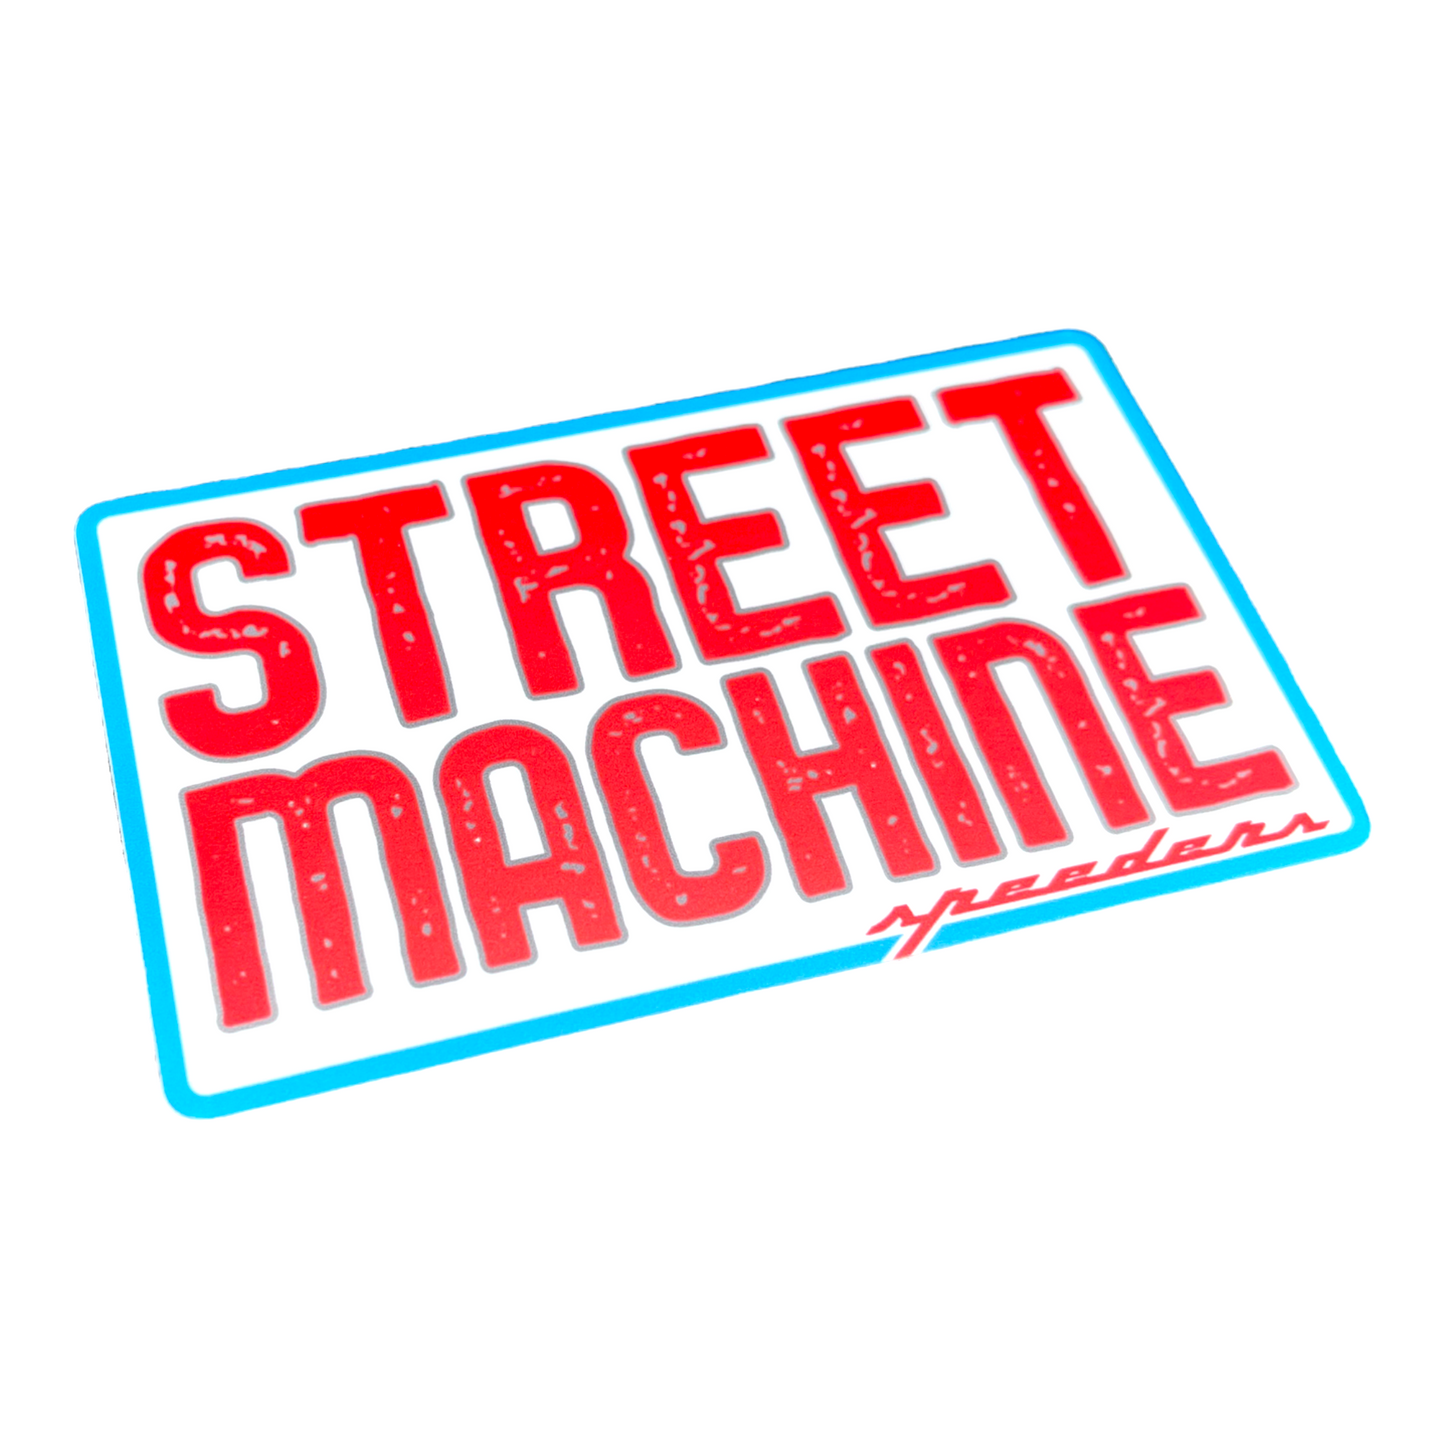 "Street Machine" Automotive Sticker (Red, White, and Blue)